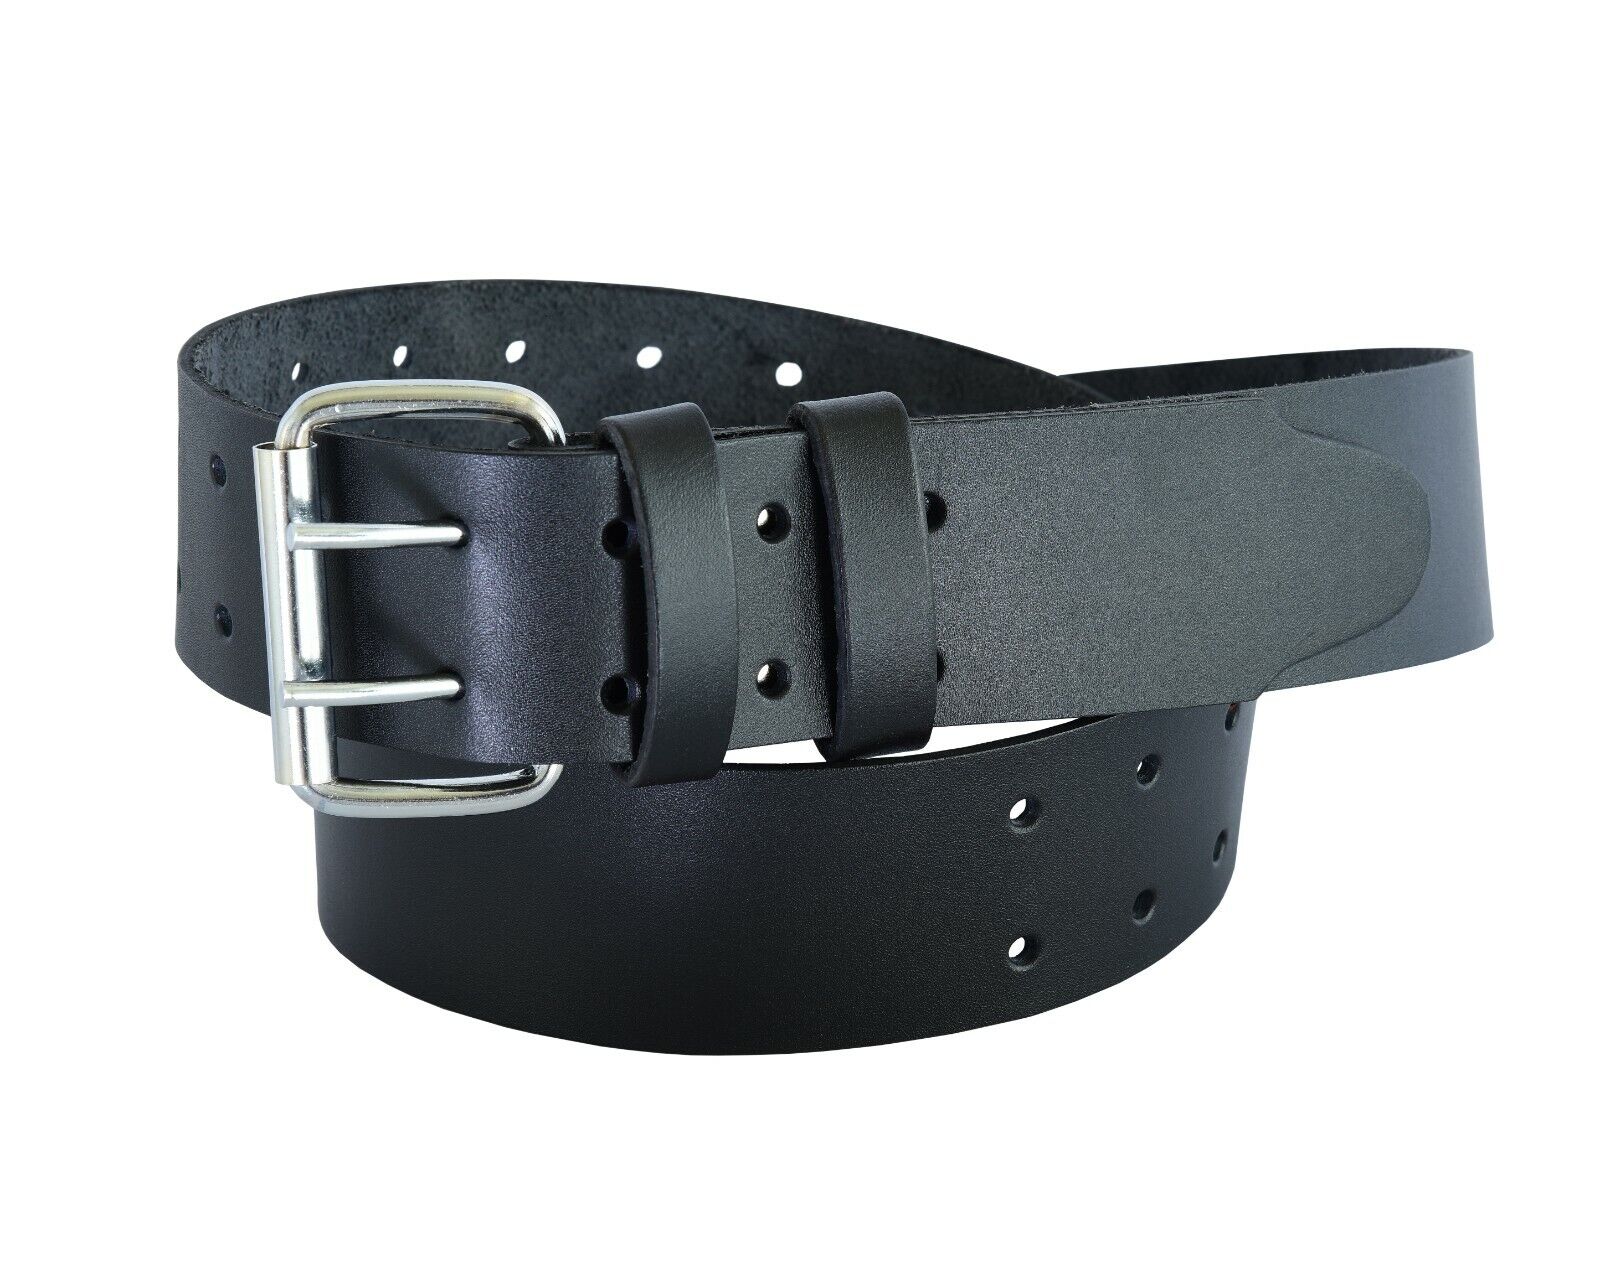 Utility Kilt Belt black leather Sturdy two prong buckle Plain